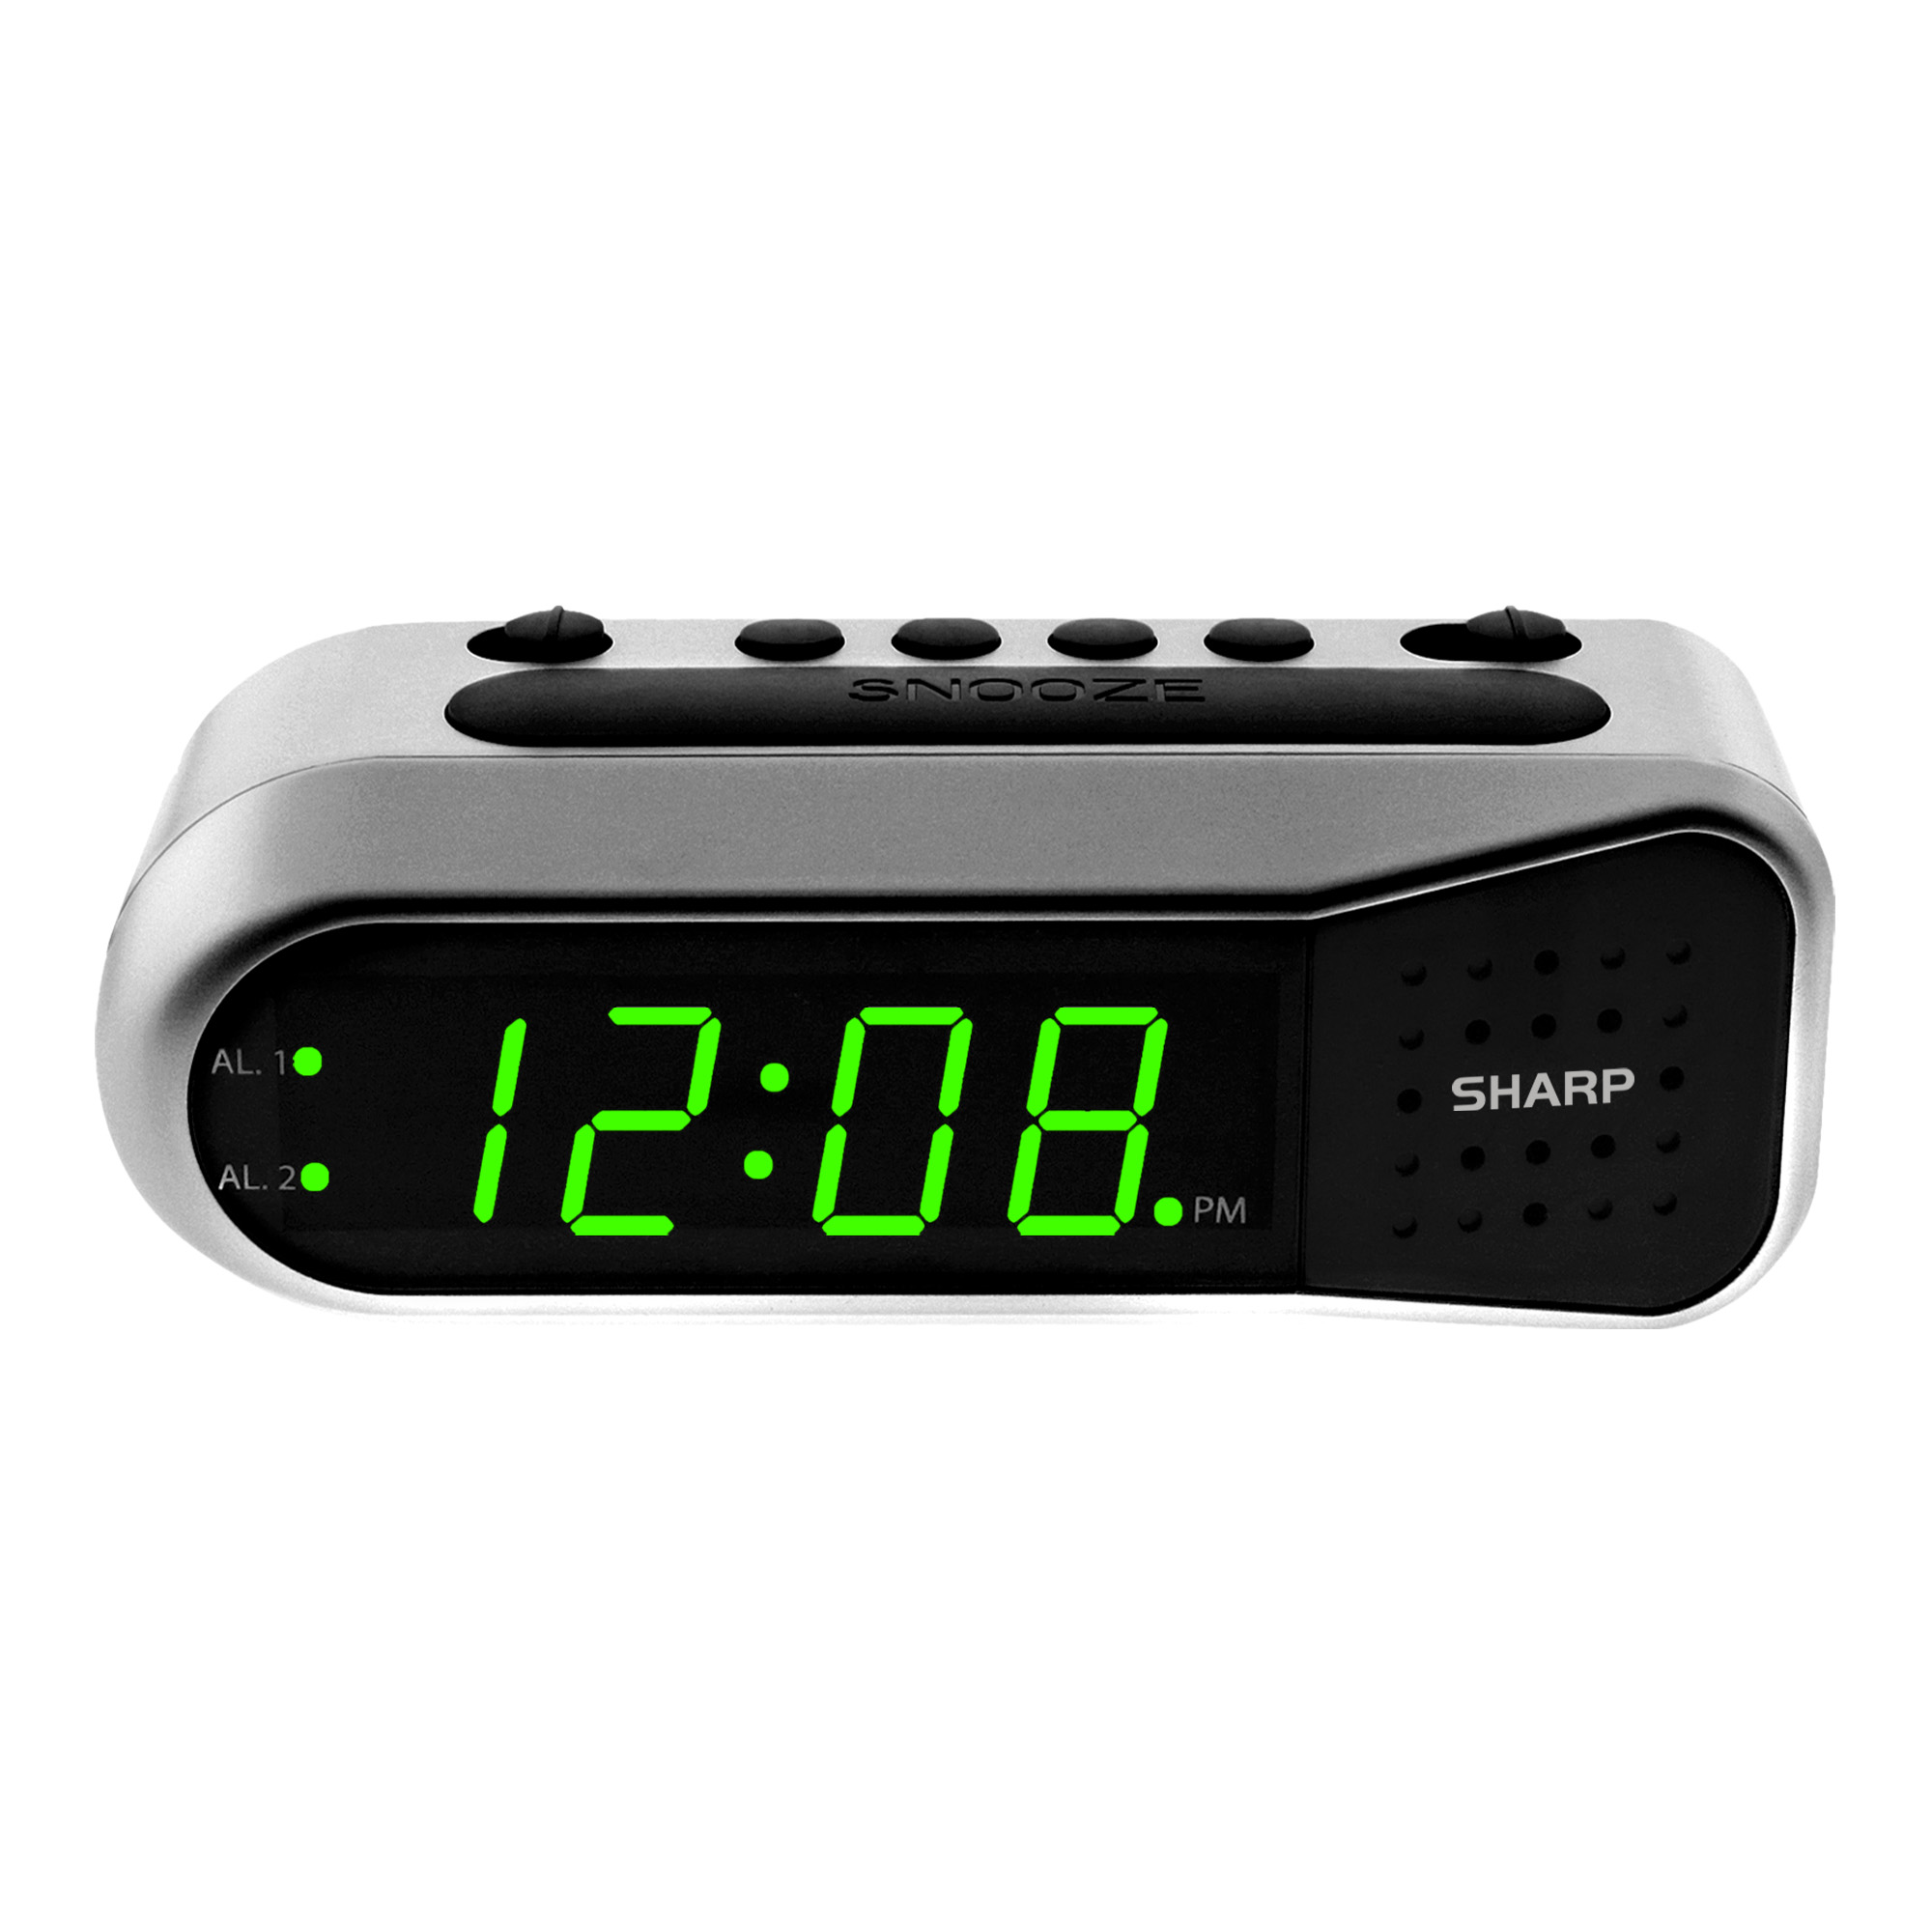 SHARP Digital Dual Alarm Clock, Silver with Green LED Display, Ascending Alarm - image 1 of 6